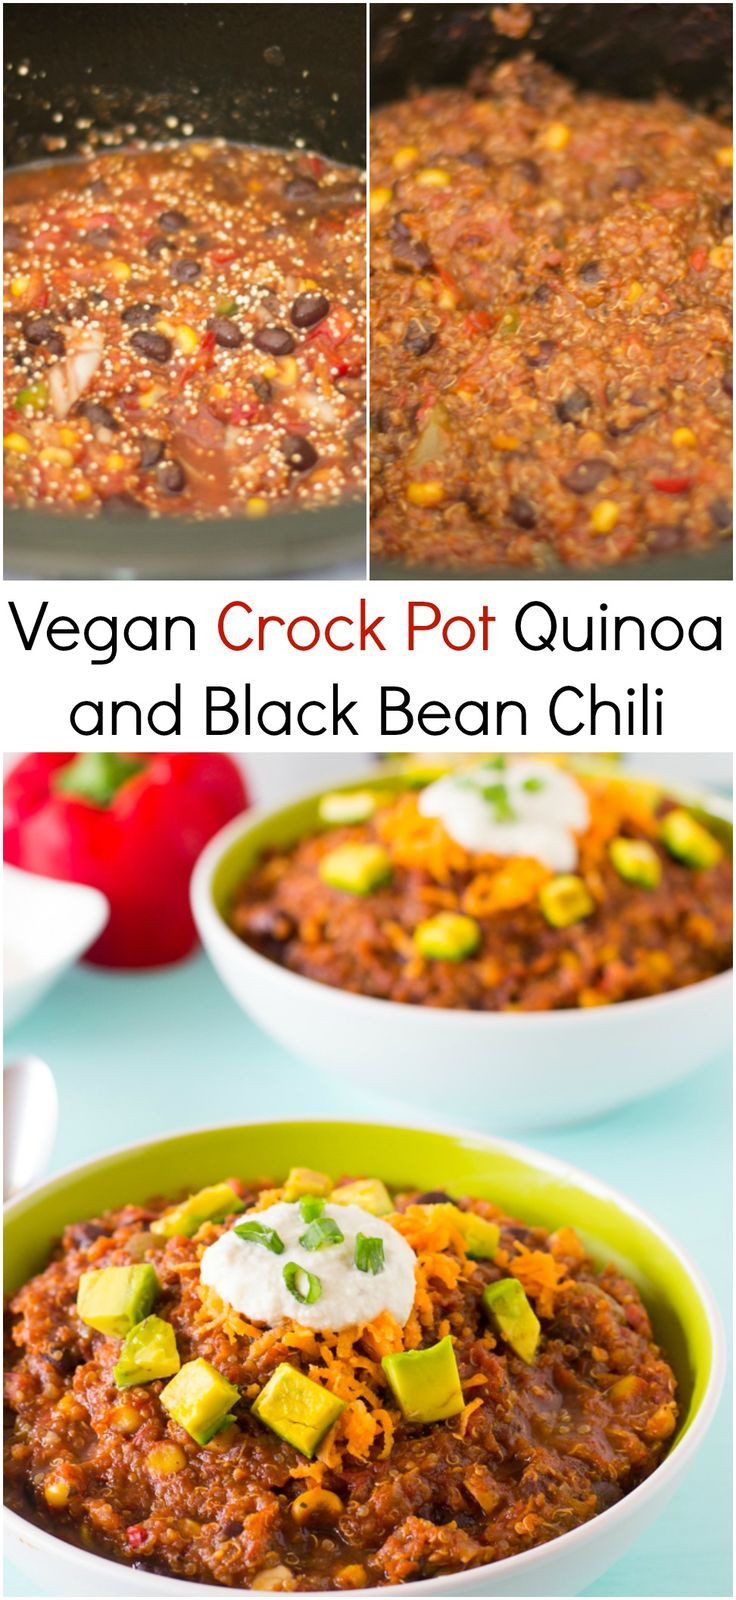 Vegetarian Crock Pot Dinners
 17 Best images about Vegan Crockpot Recipes on Pinterest